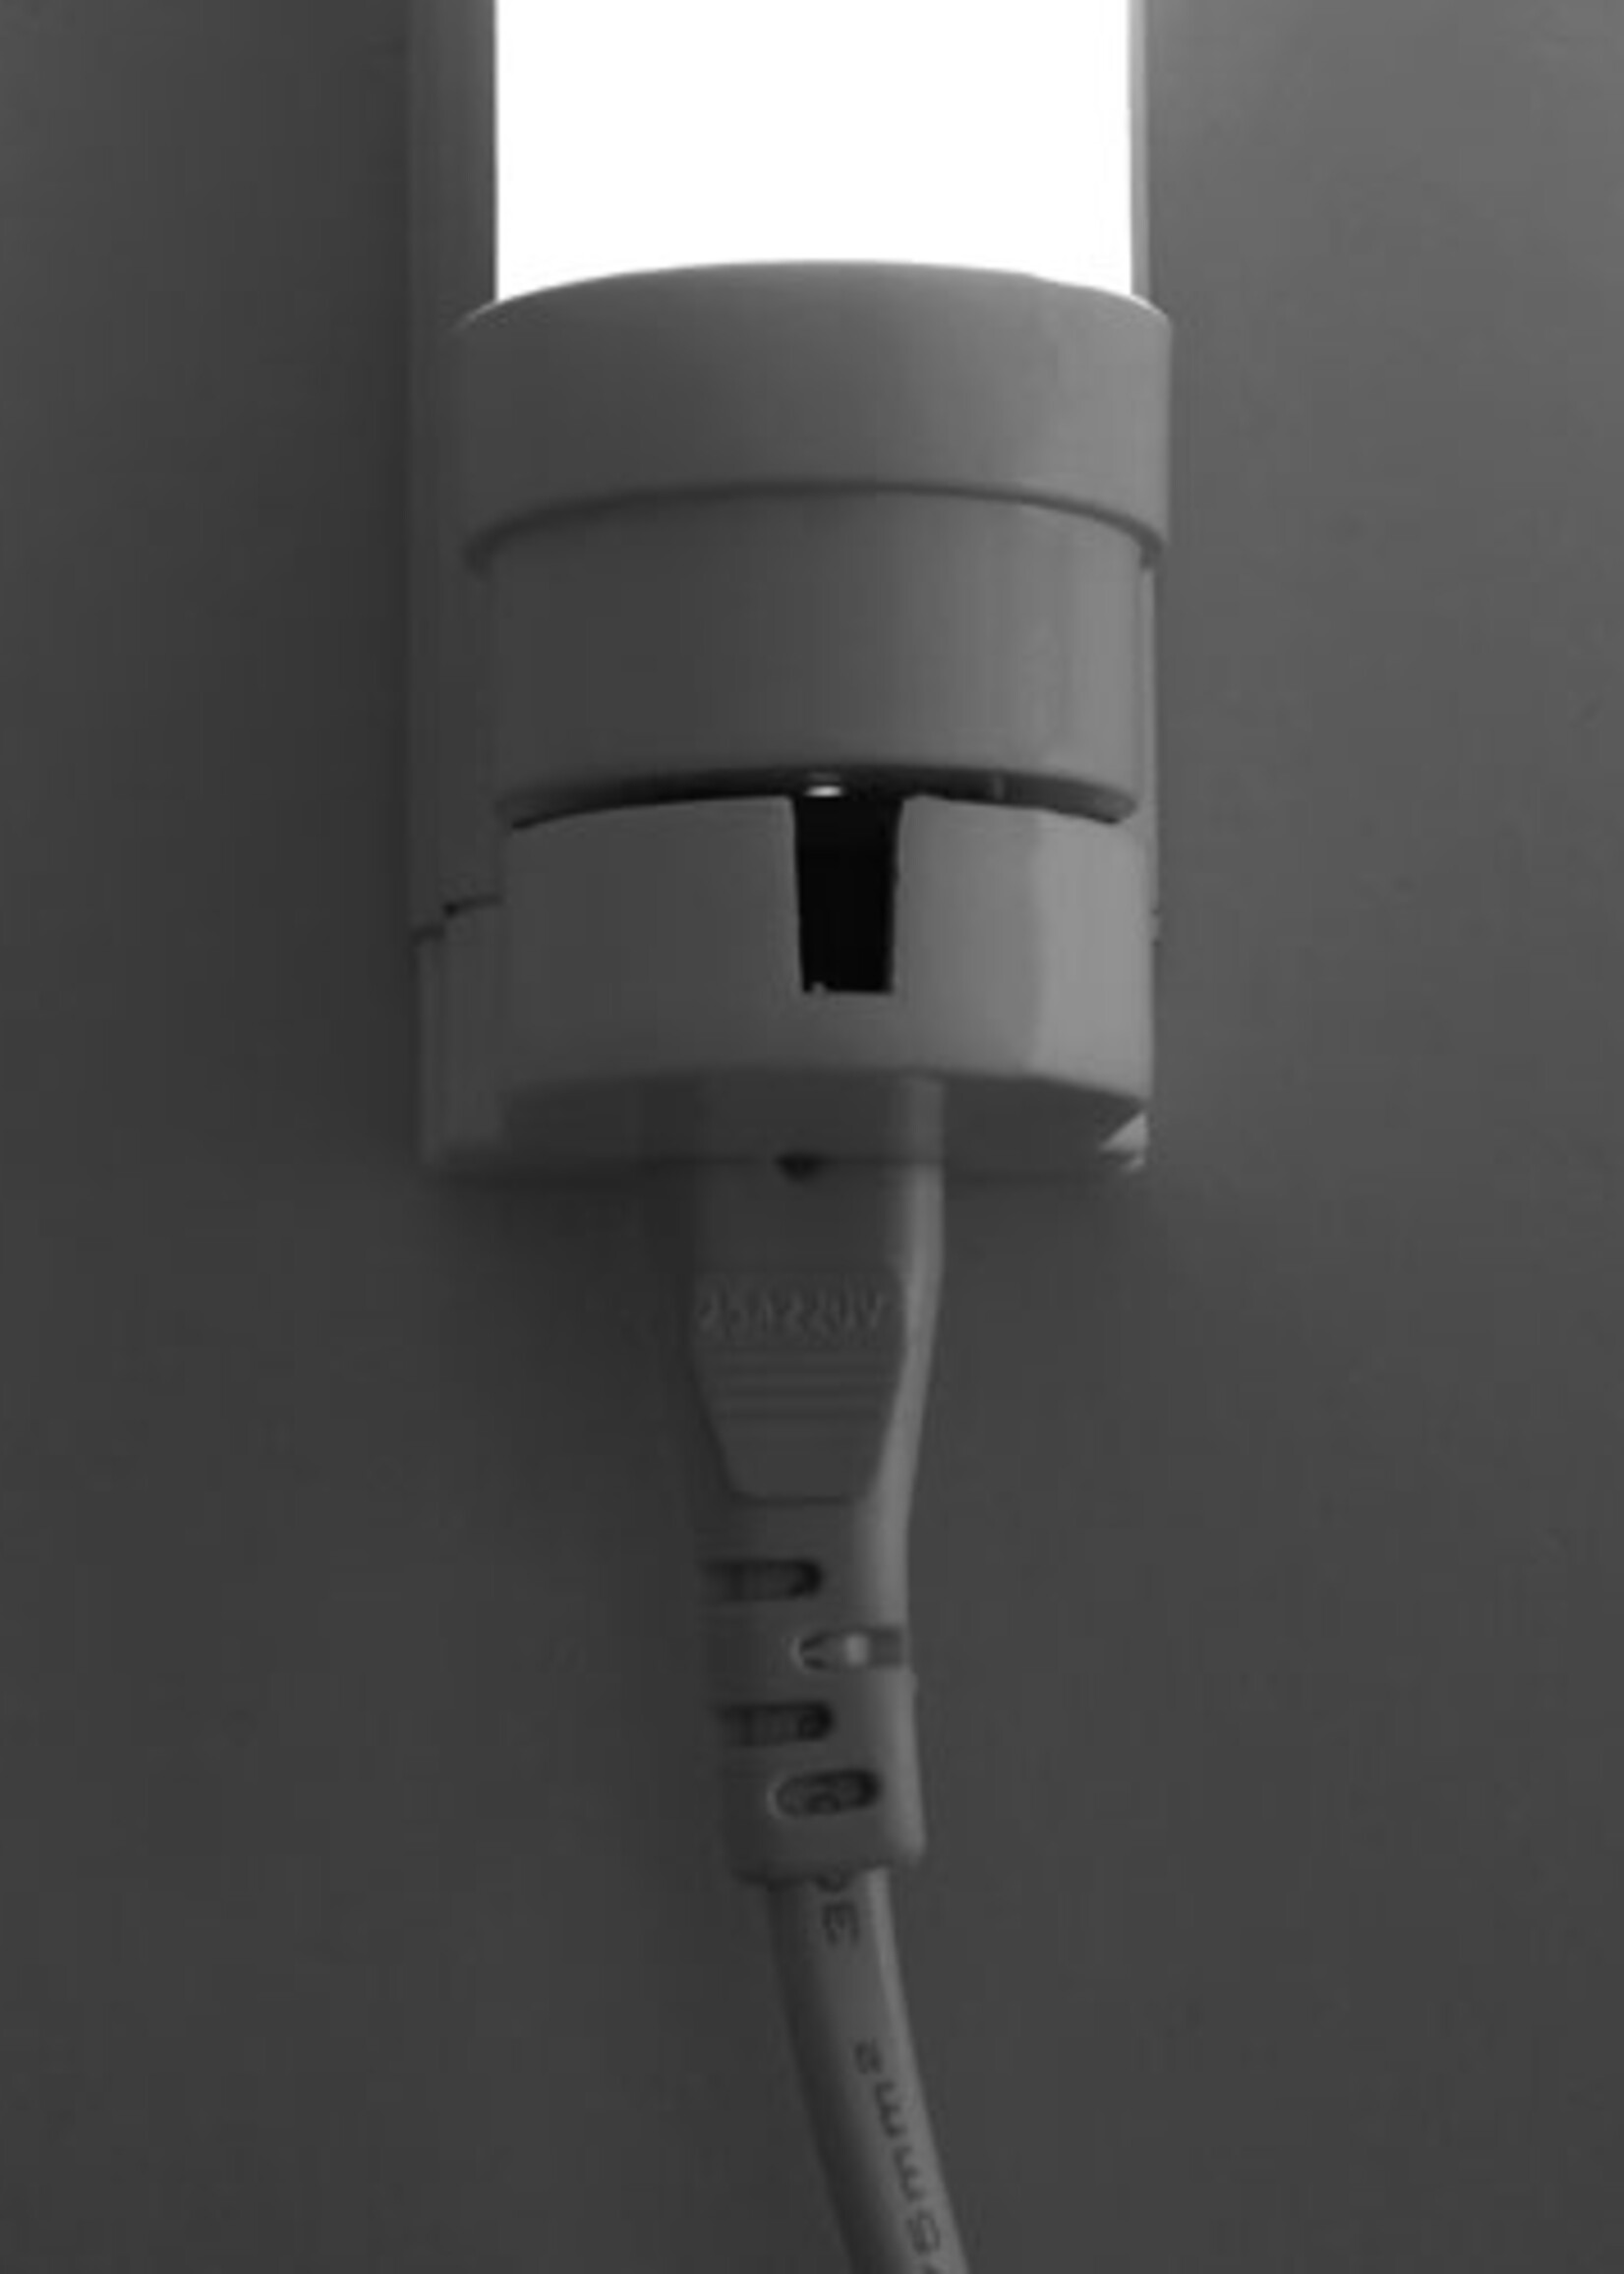 LEDWINKEL-Online LED TL Buis 150cm 25W 160lm/W - Ultra High lumen